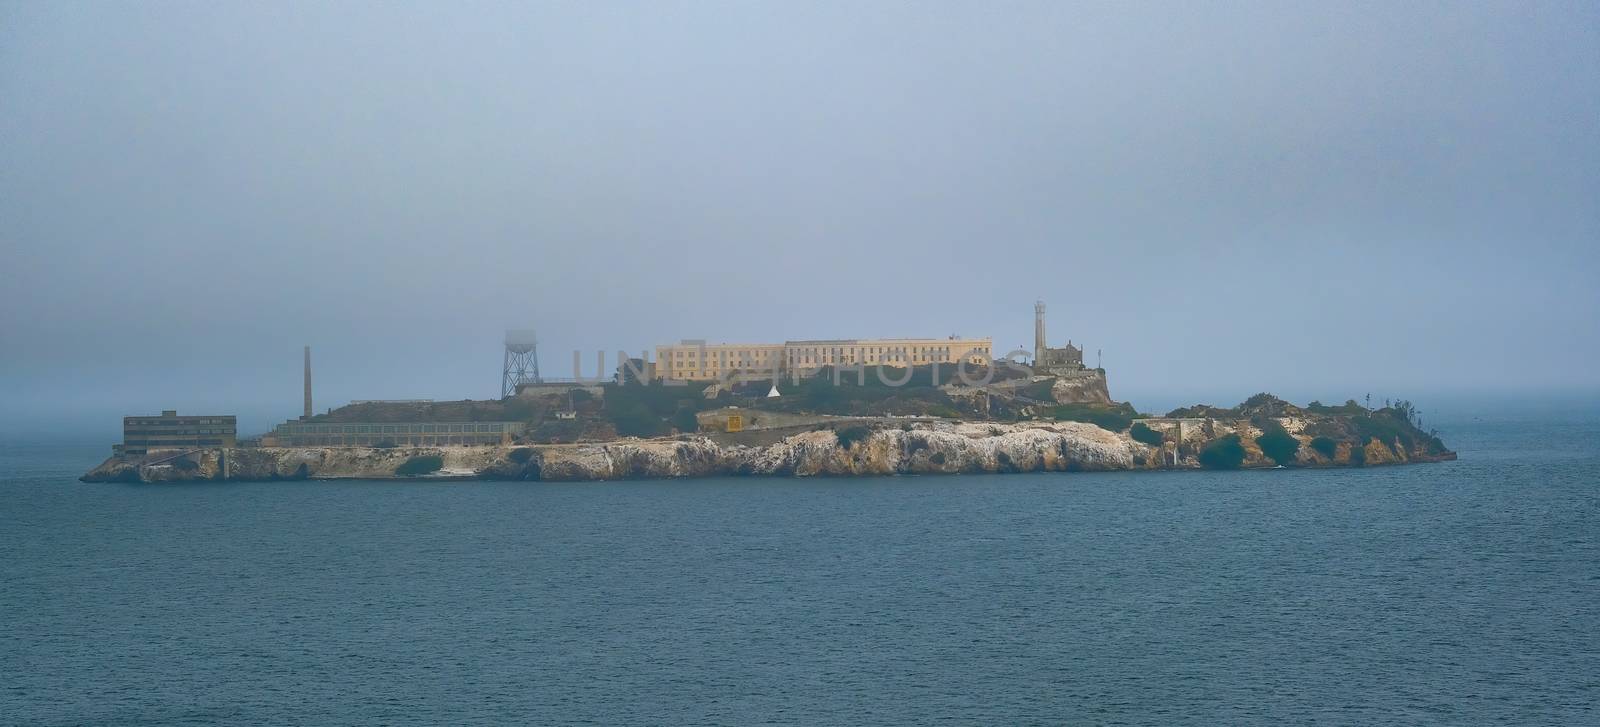 Prison of Alcatraz by dbvirago